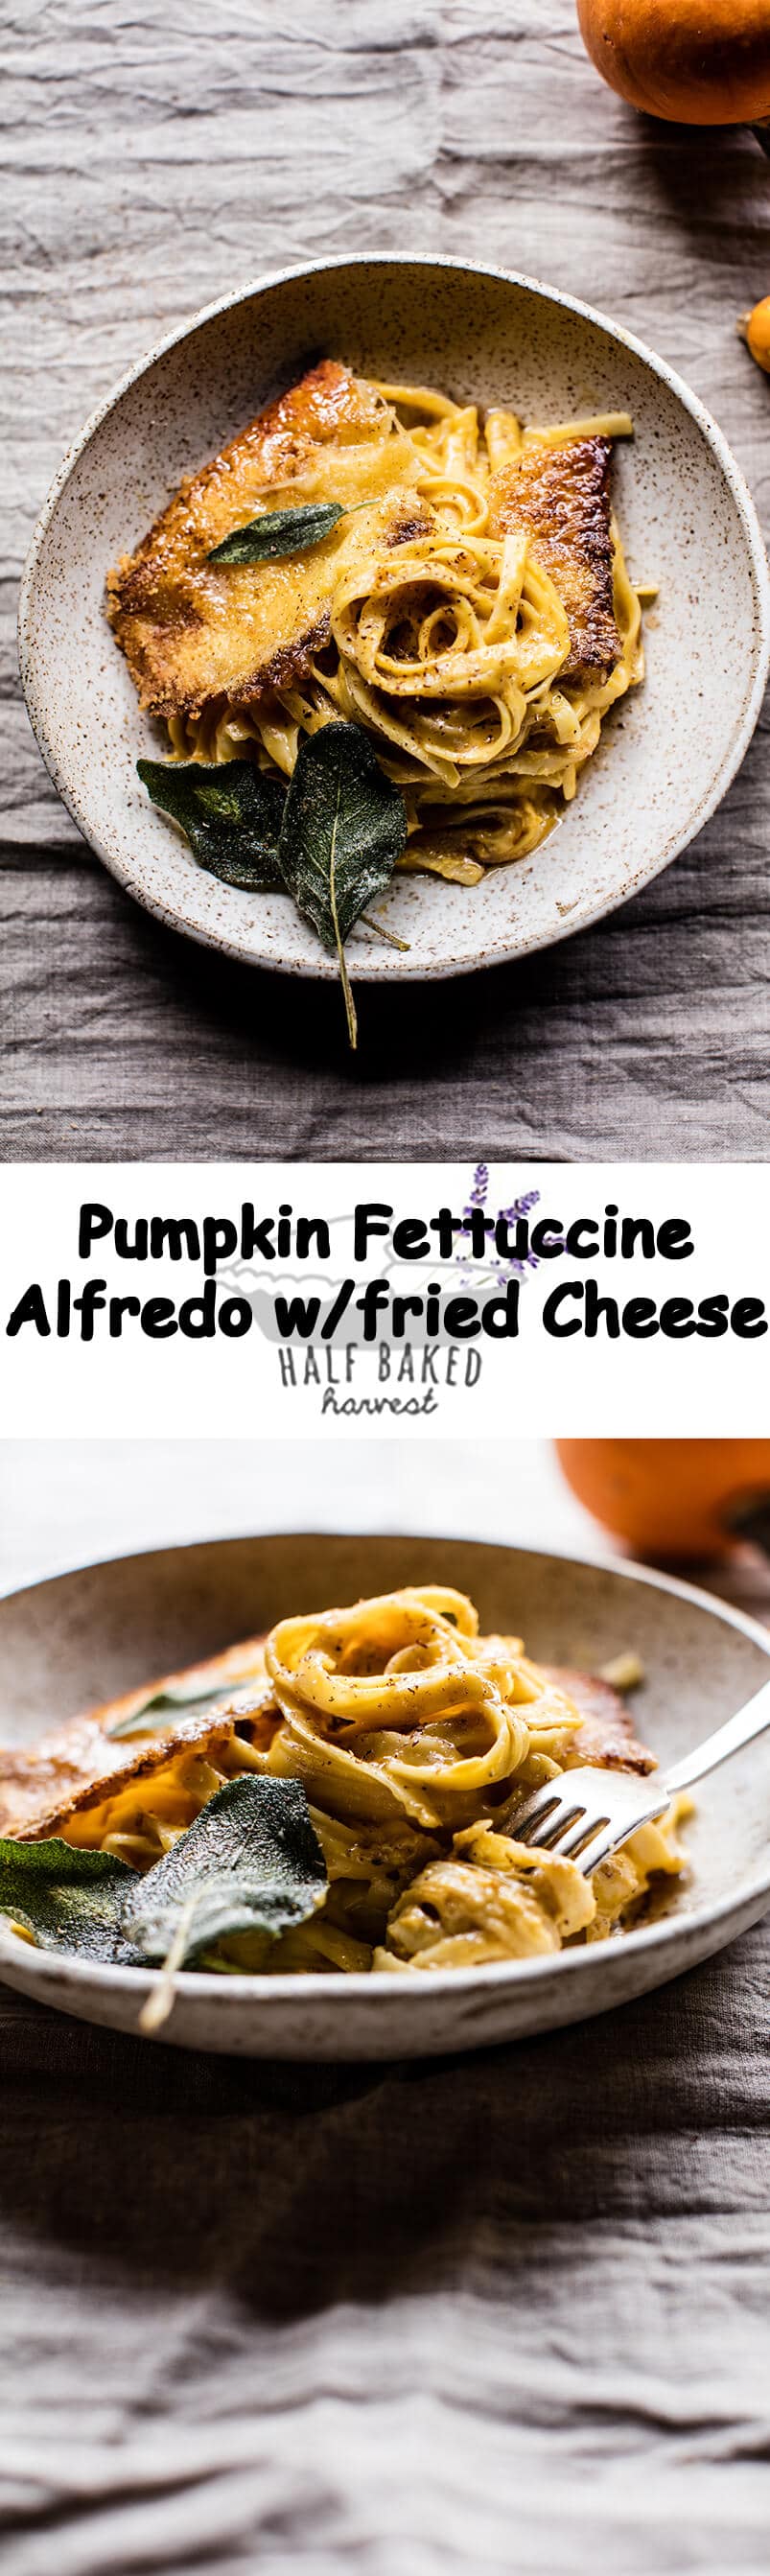 Brown Butter Pumpkin Fettuccine Alfredo with Fried Cheese | halfbakedharvest.com @hbharvest